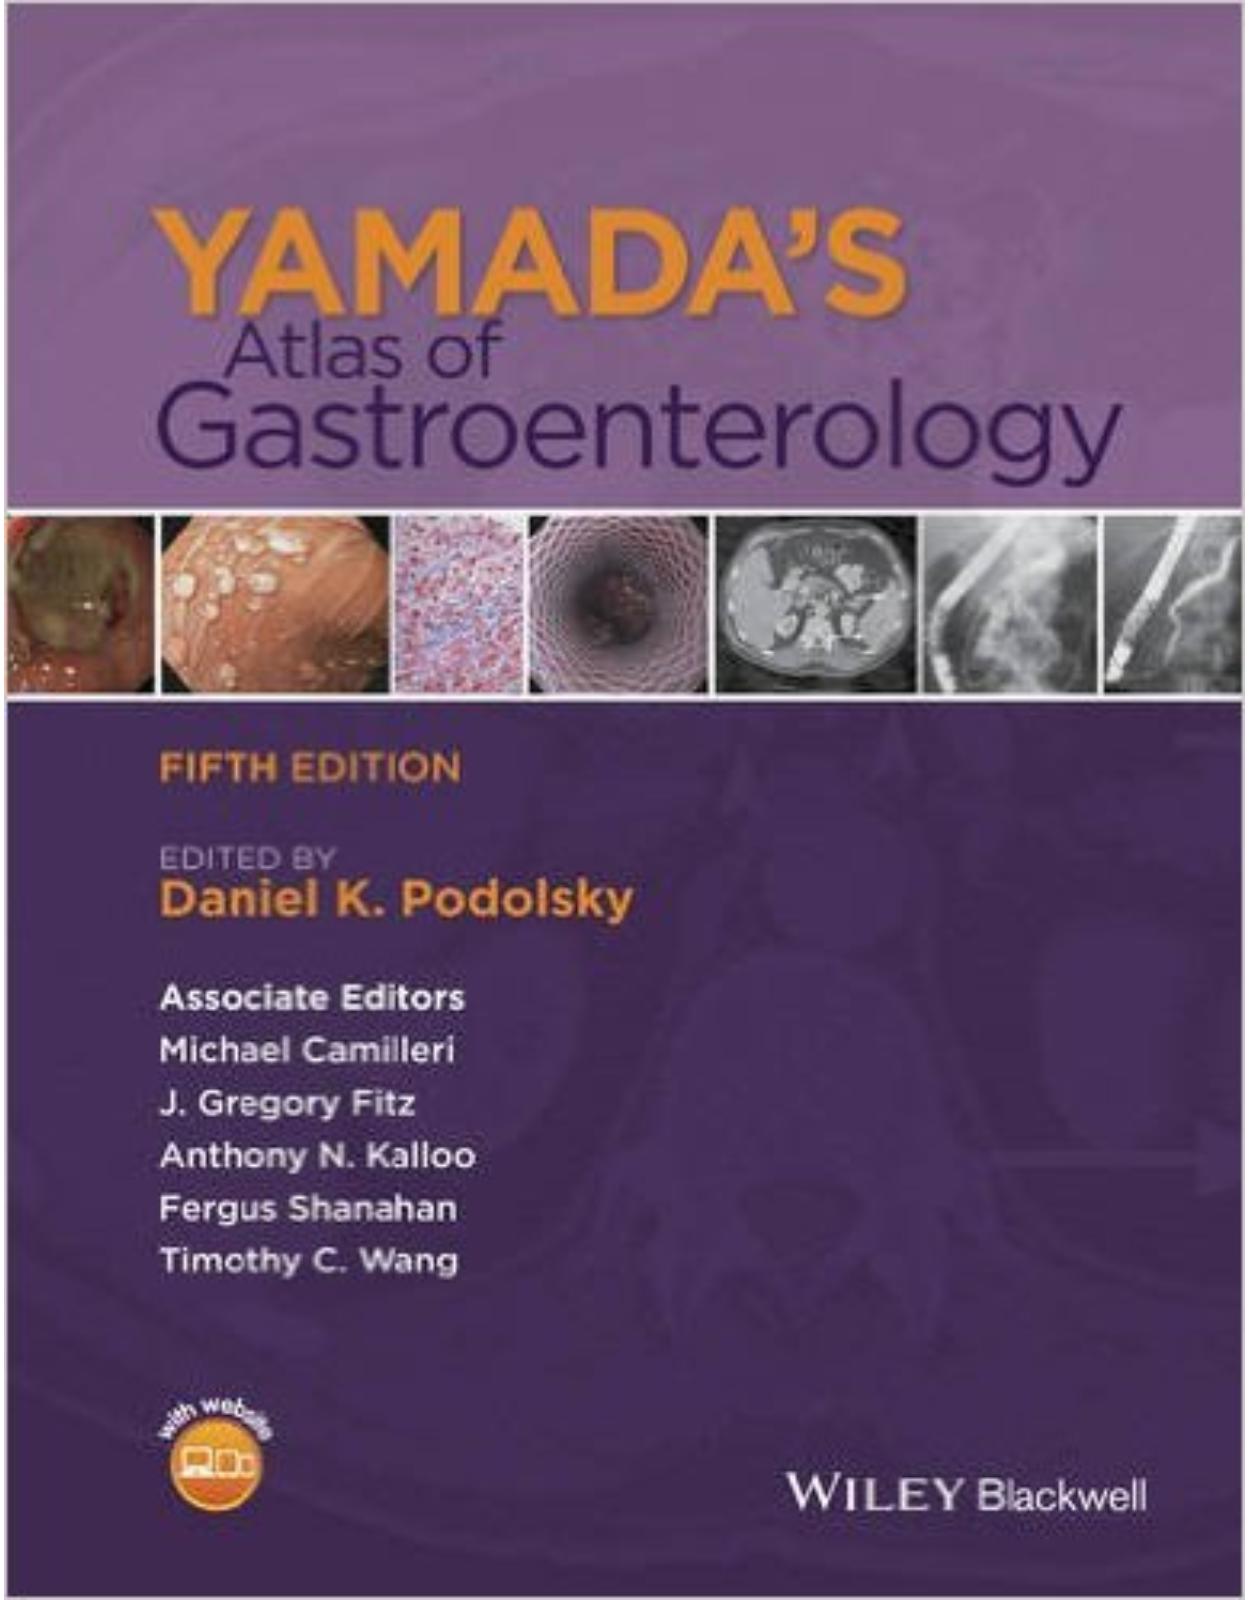 Yamada's Atlas of Gastroenterology, 5th Edition